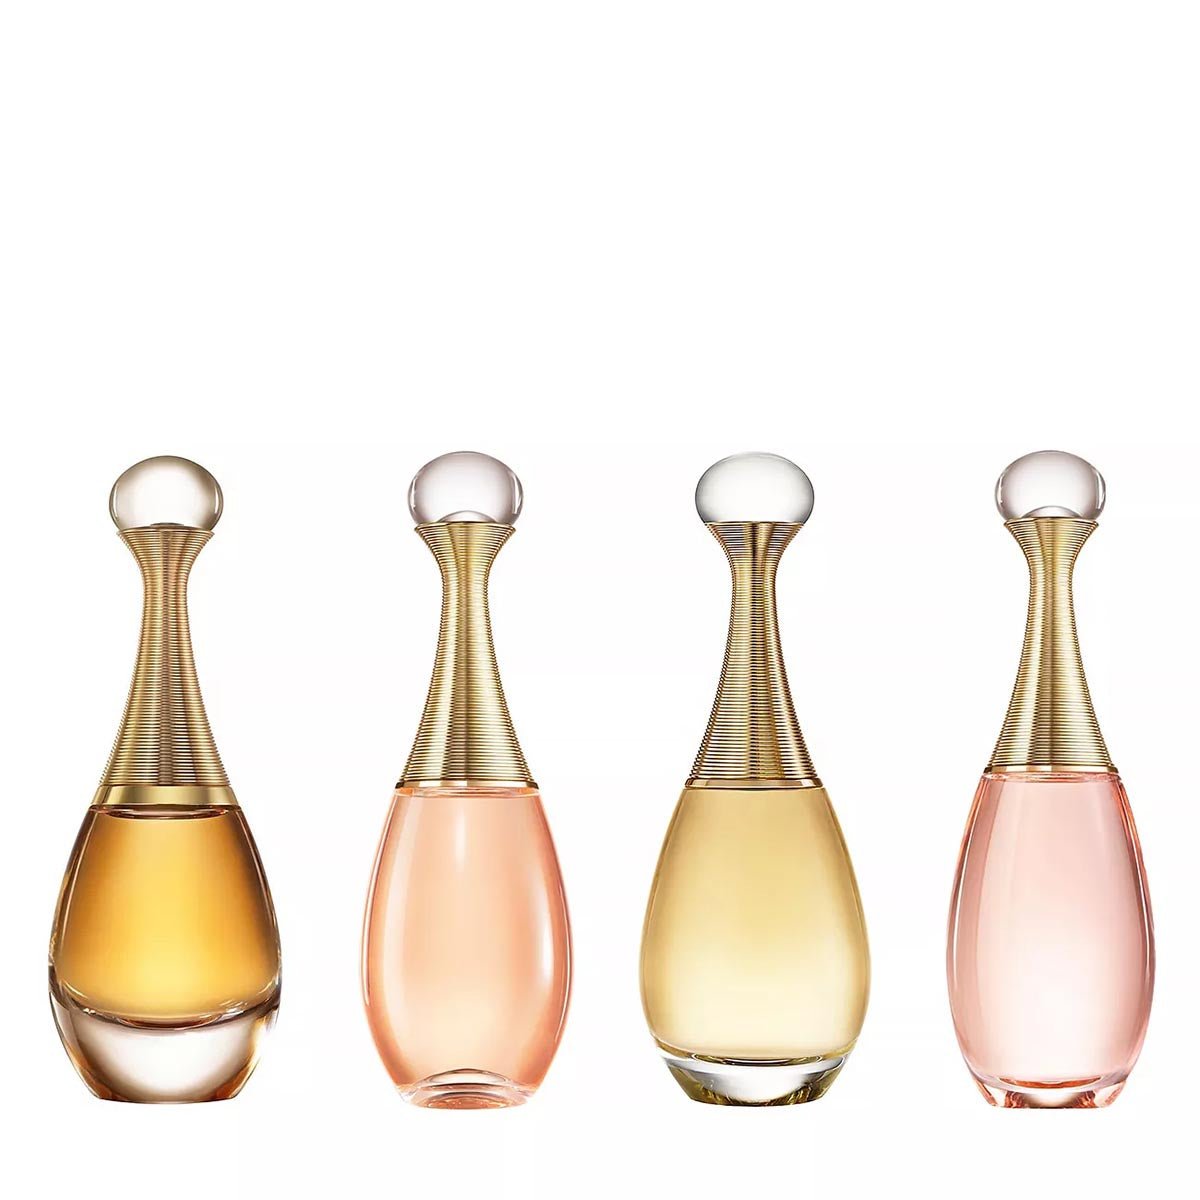 Dior J'adore La Collection Mini Set | My Perfume Shop Australia